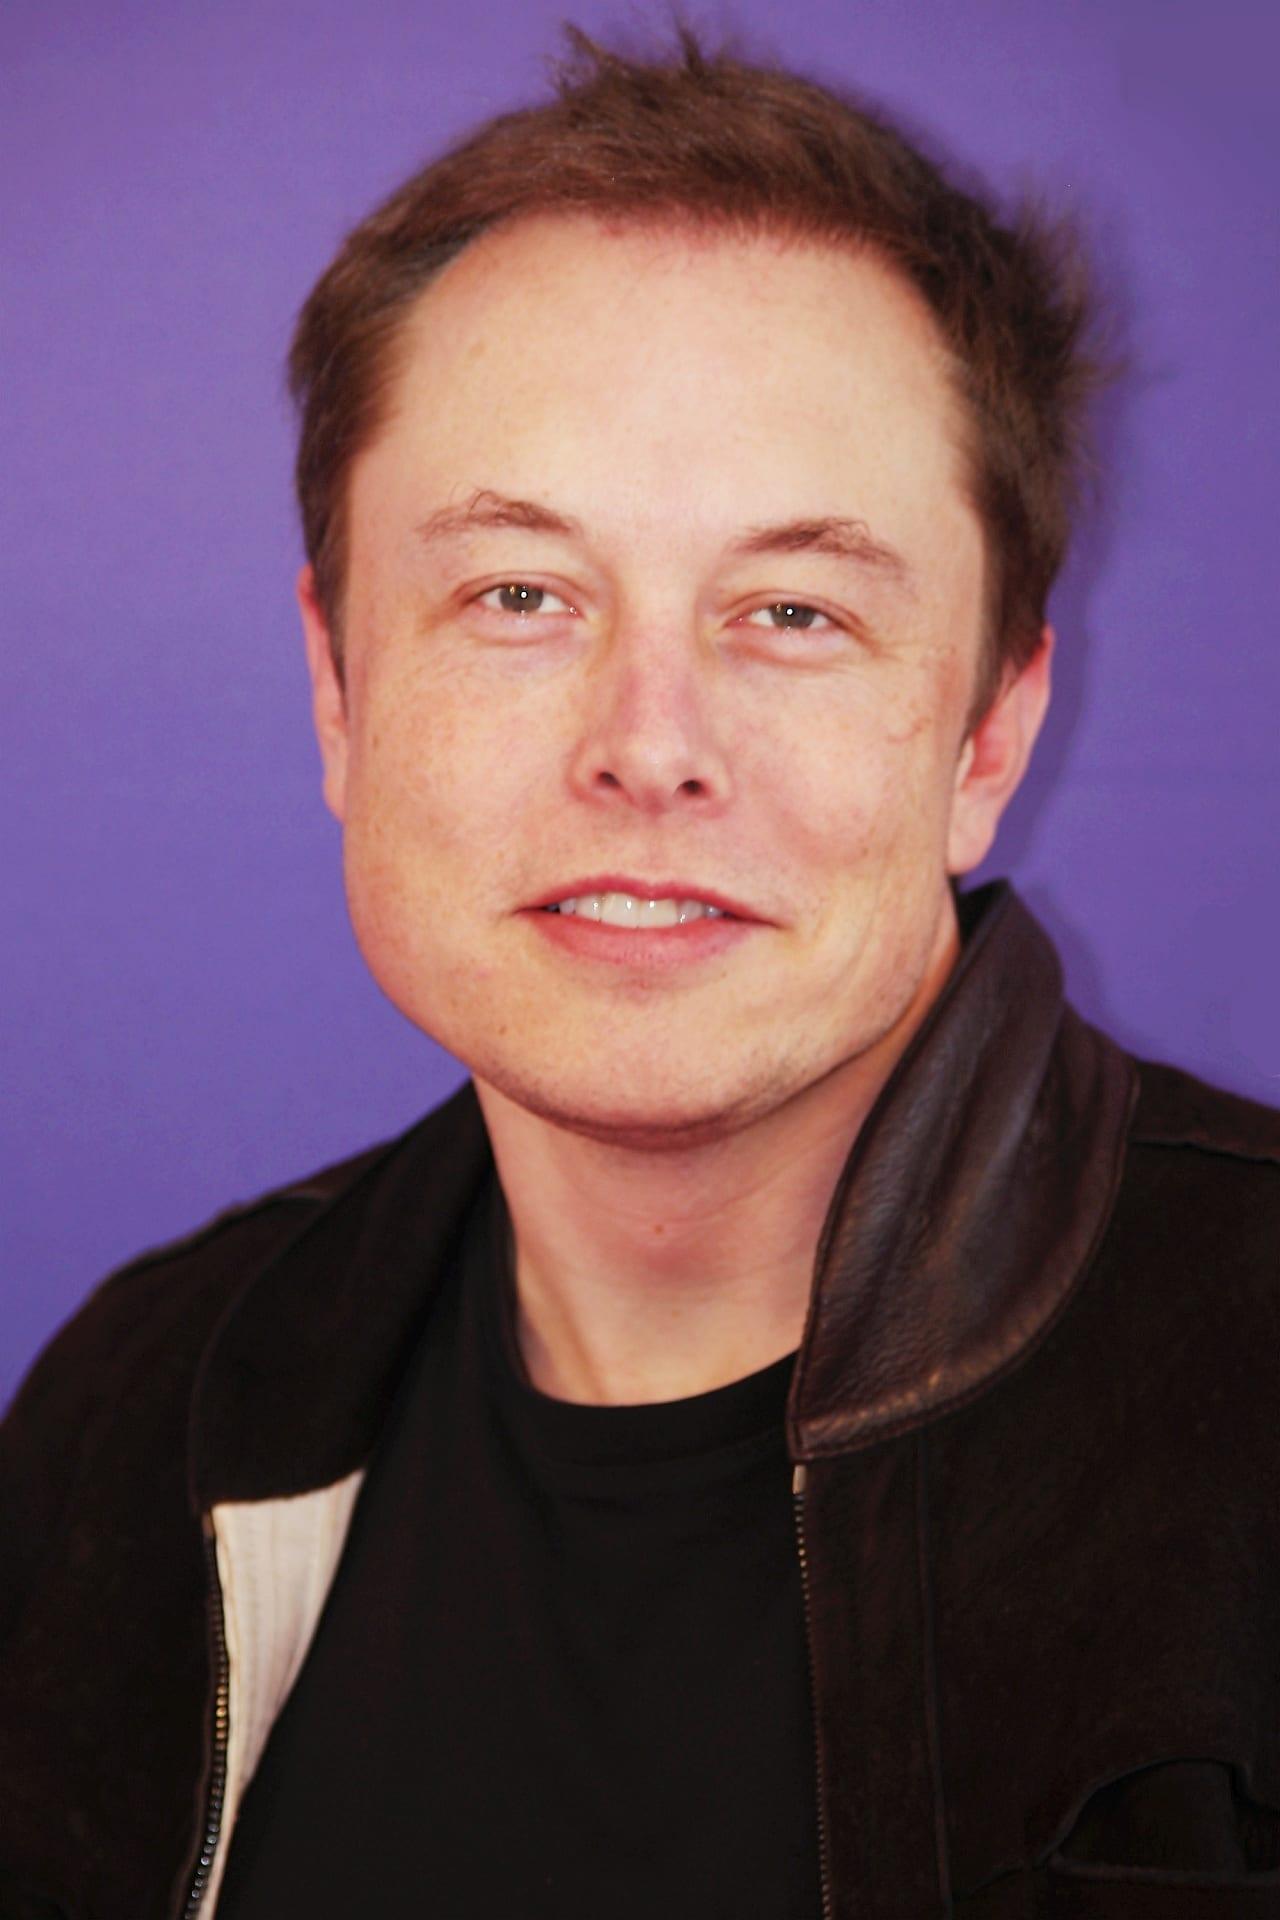 Elon Musk | Valet (uncredited)